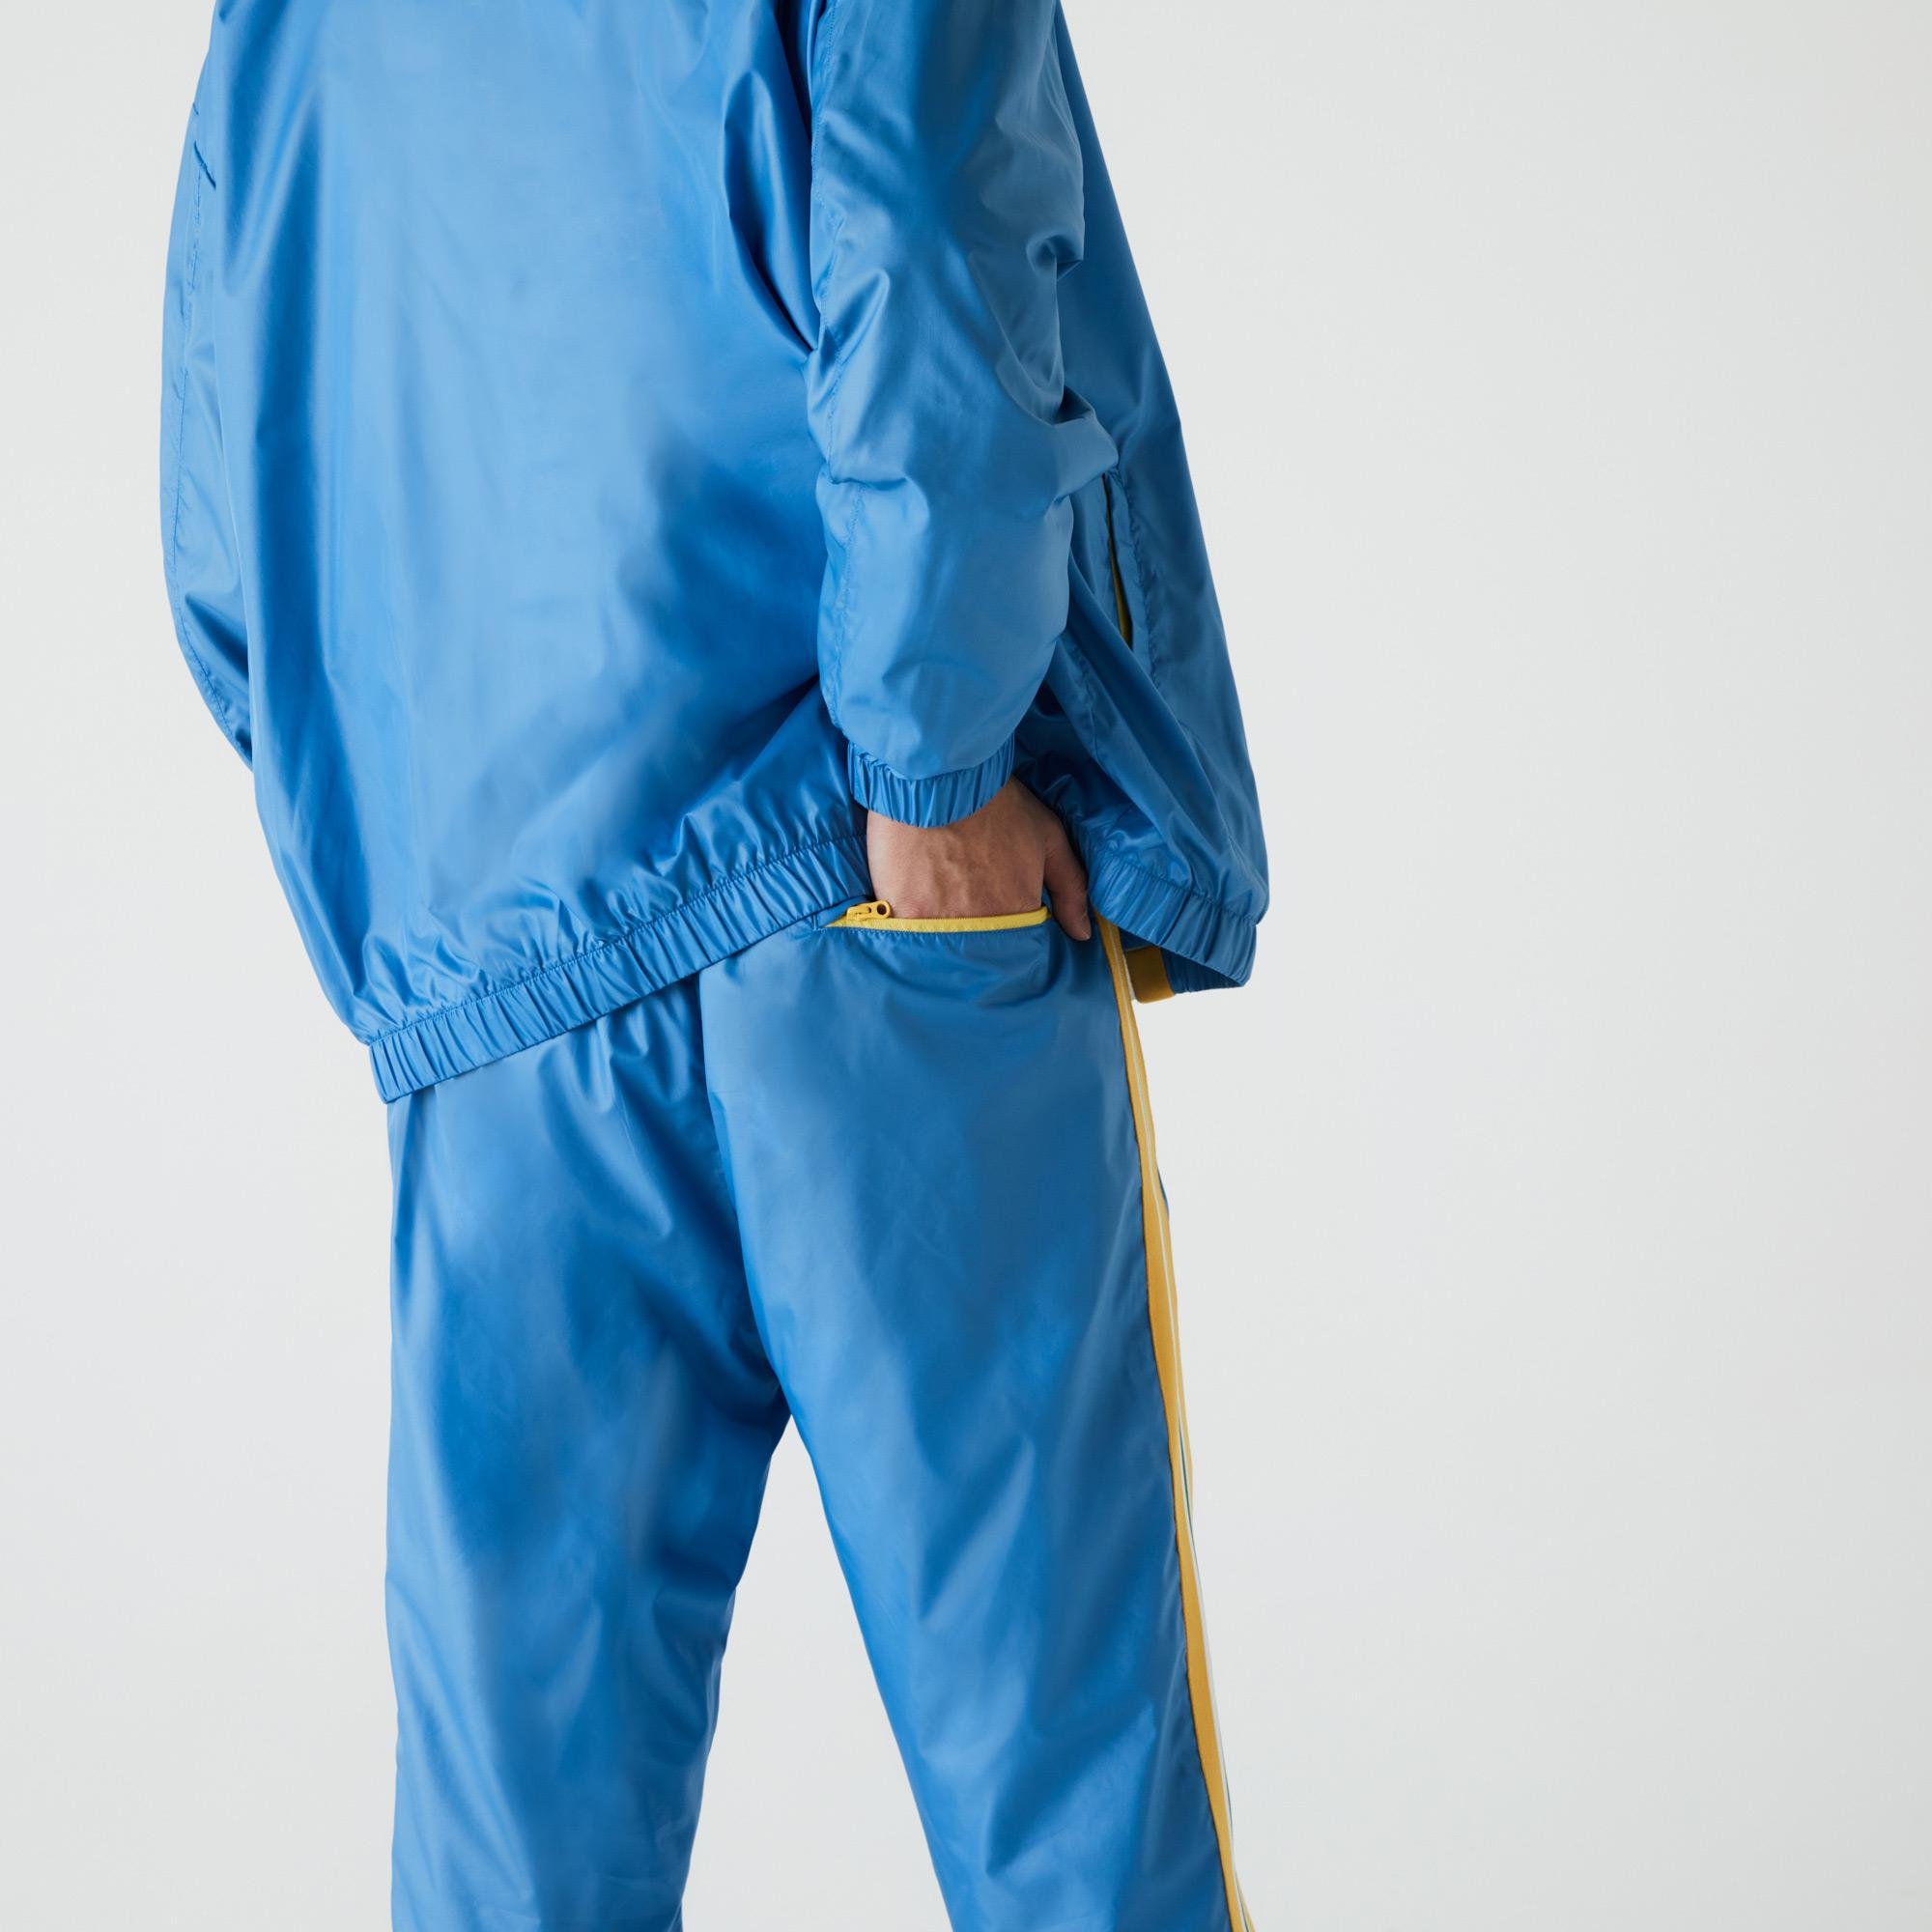 Lacoste Men?s Heritage Water-Resistant Tracksuit Pants